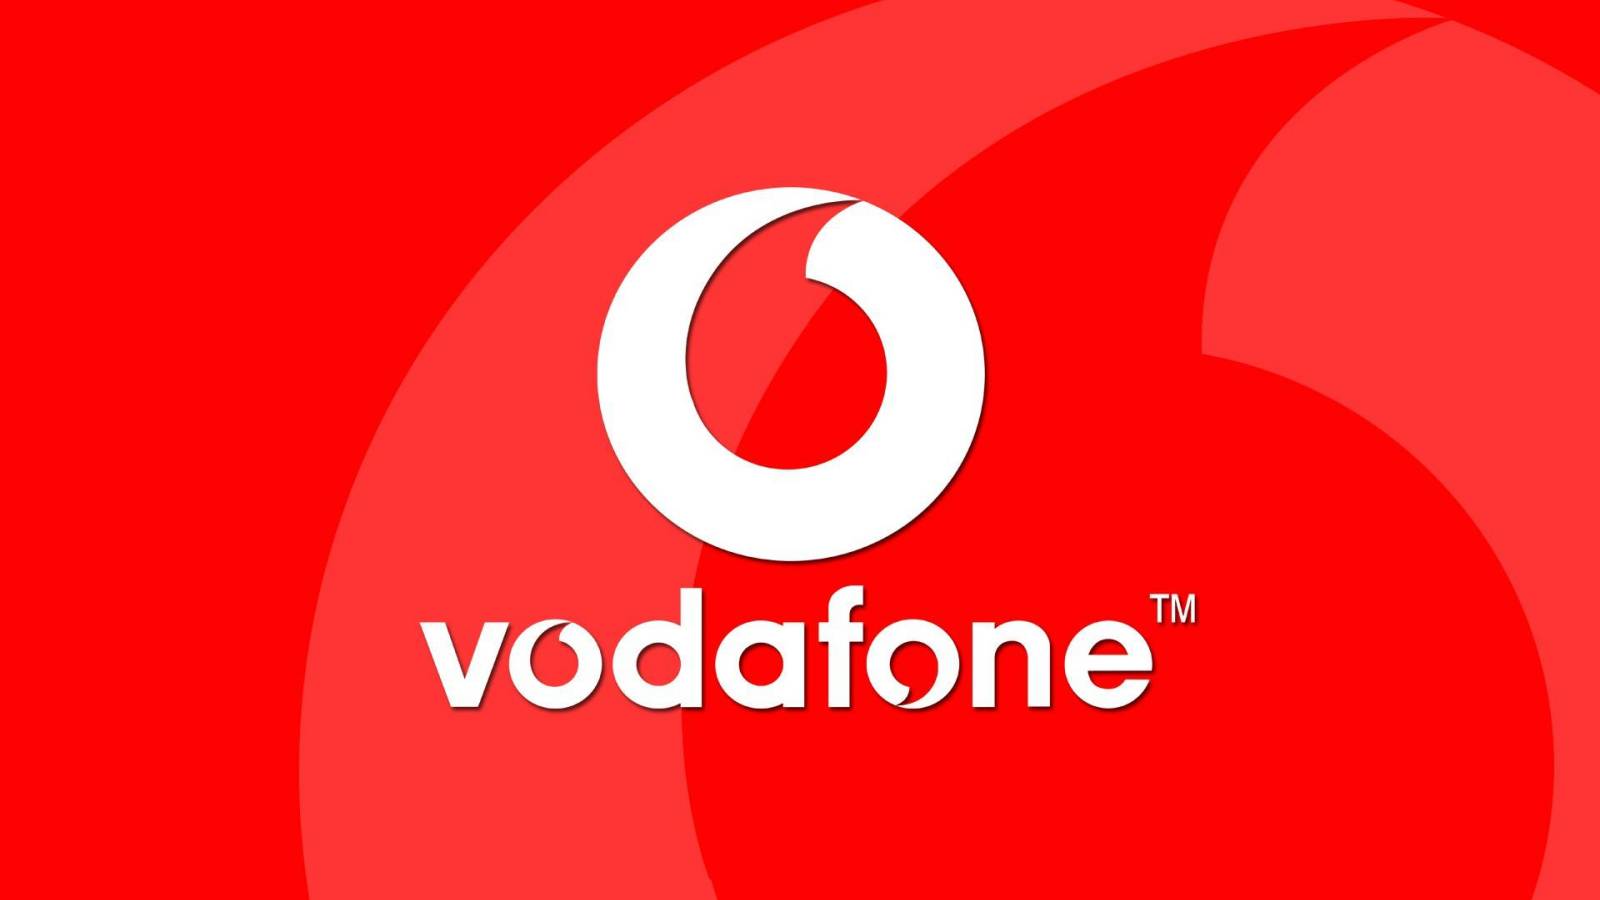 Vodafone t.ex